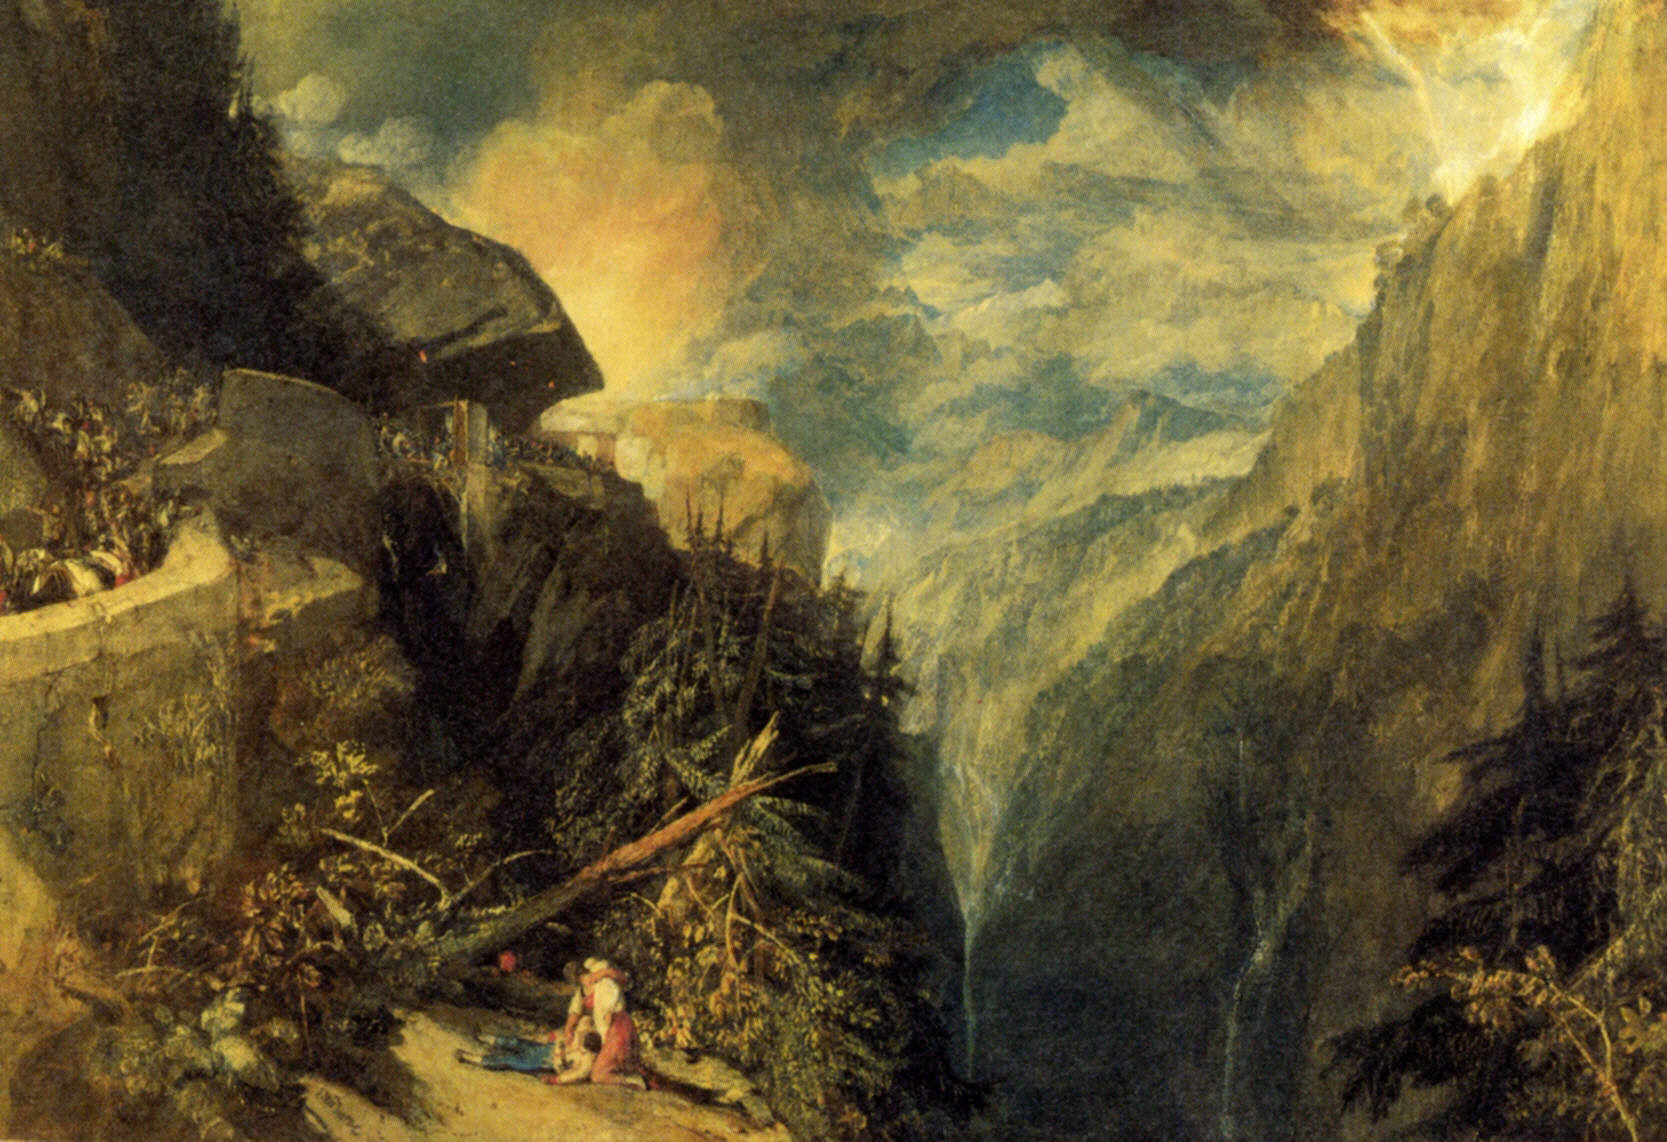 The Battle of Fort Rock, Val d'Aoste, Piedmont (1815).